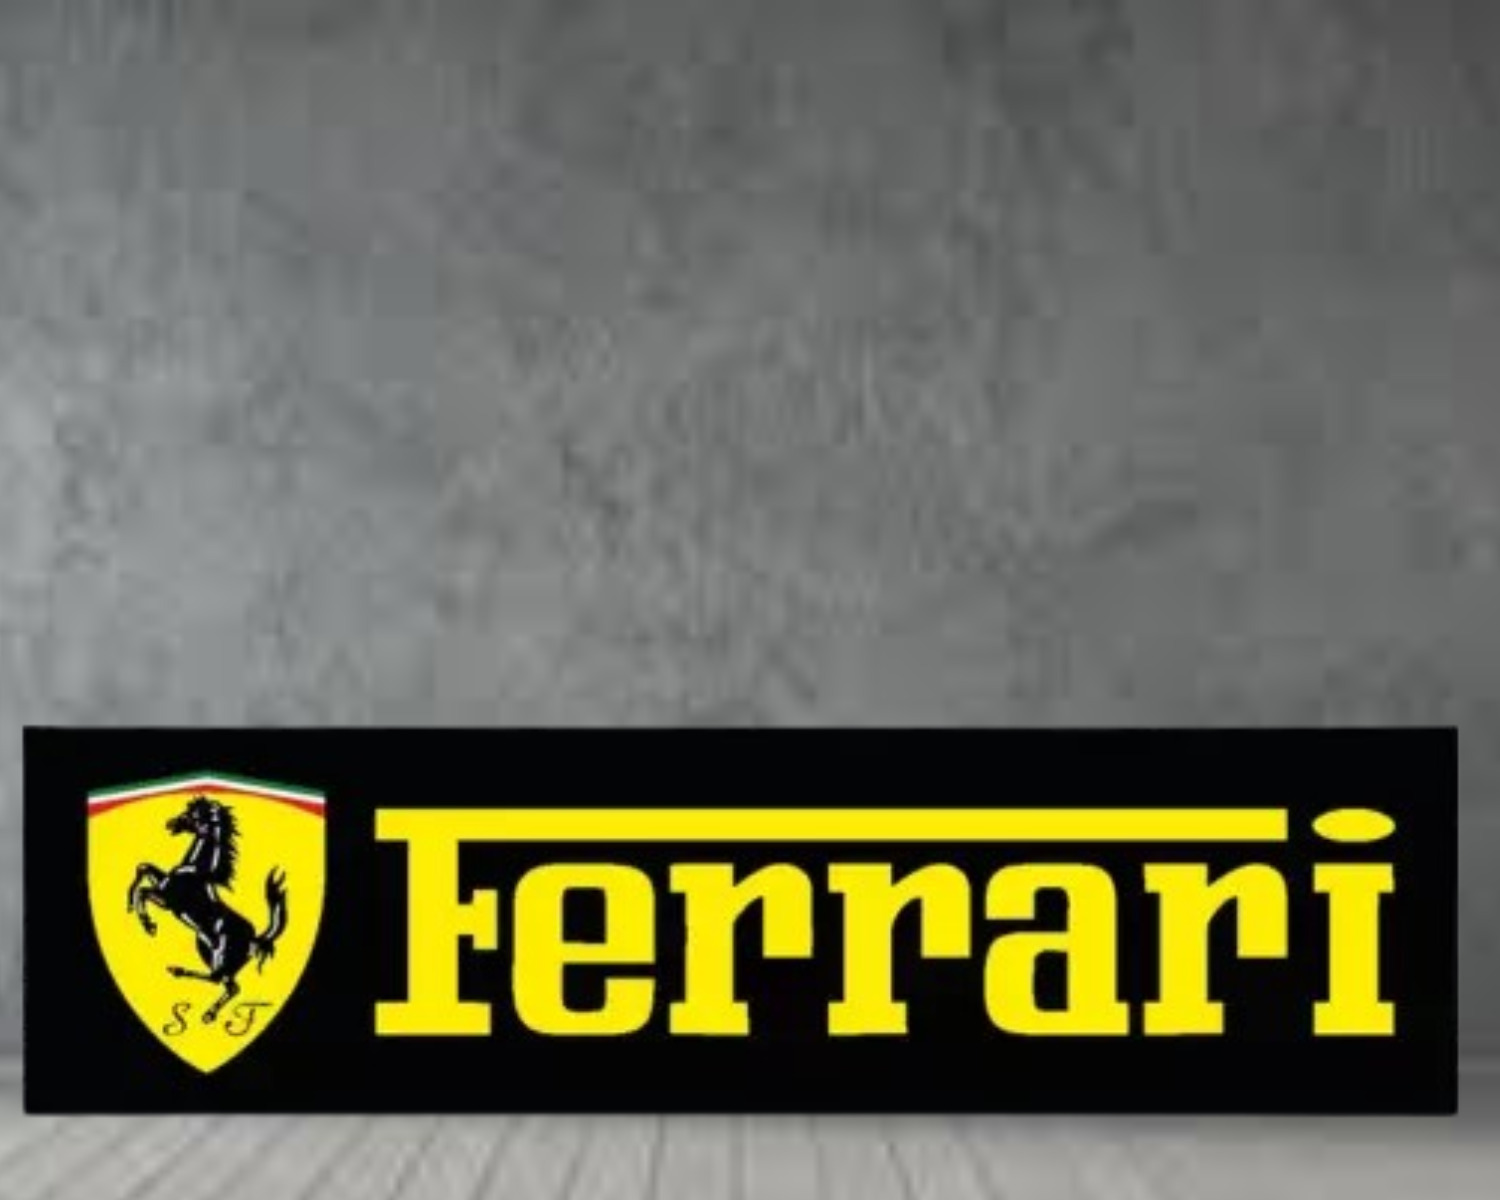 Ferrari   Porcelain Enamel Heavy Metal Sign 48 x 18  Inches Single Side